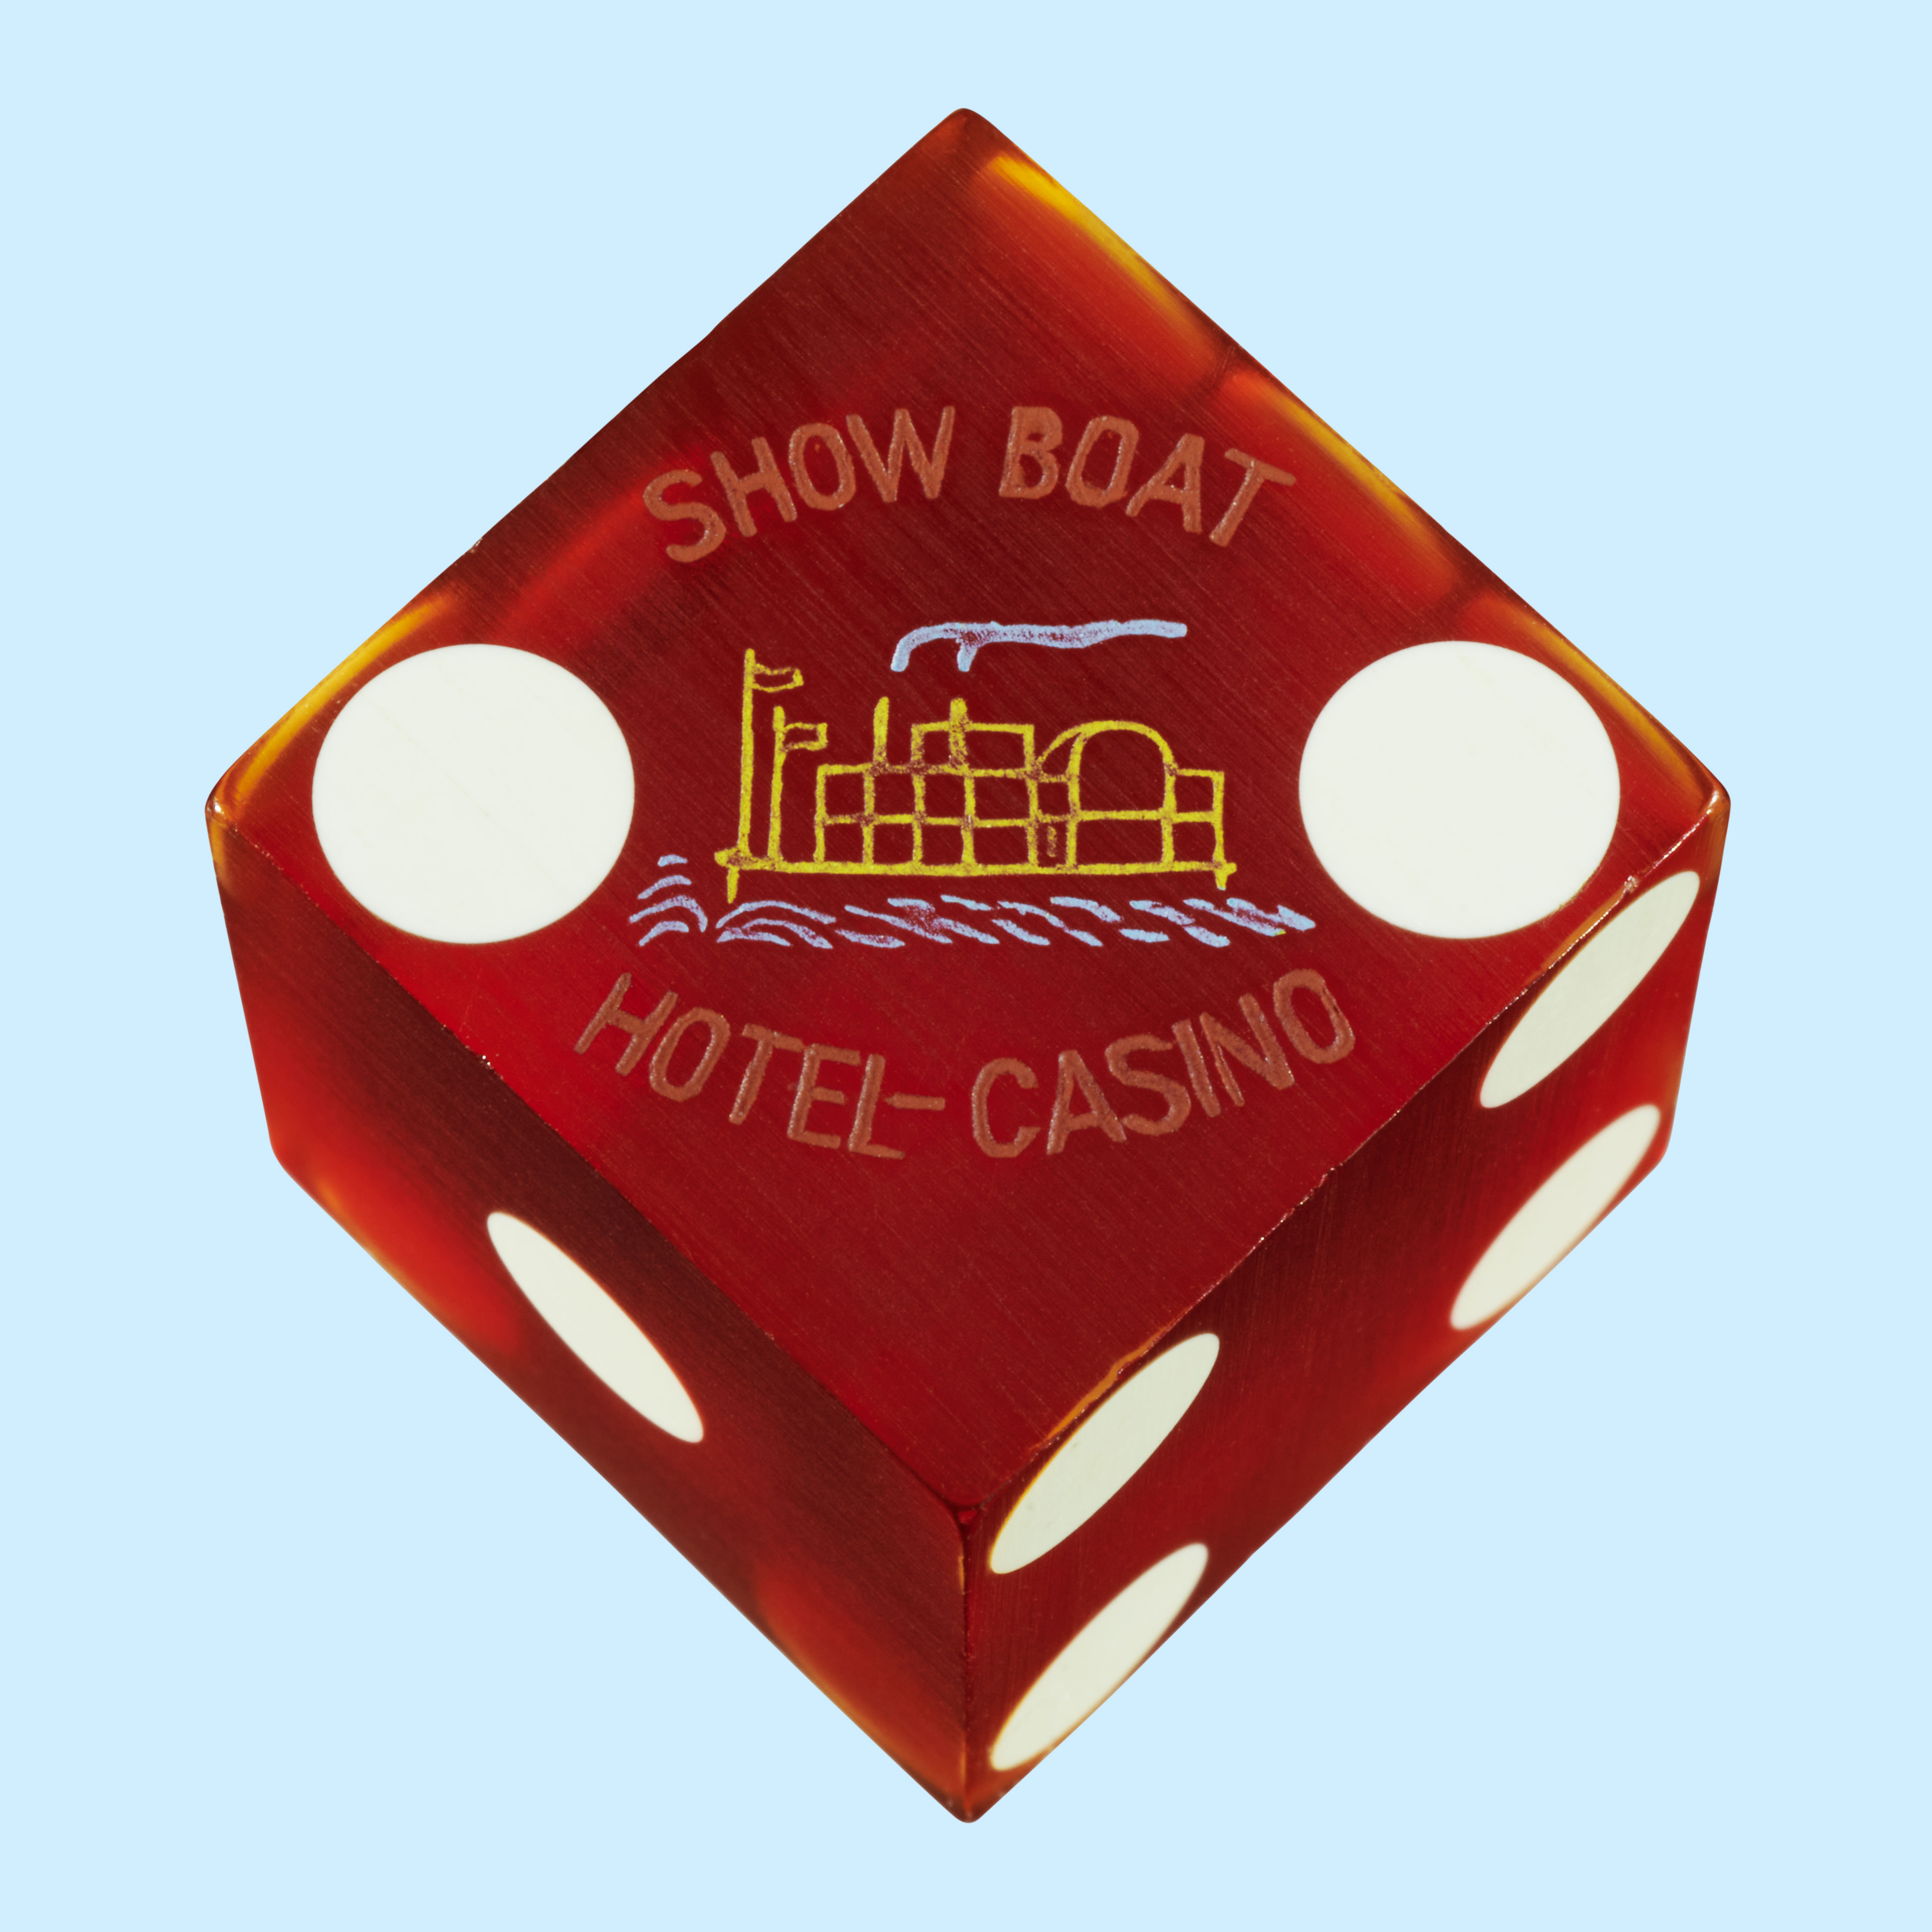 Showboat_Casino_2947_SFW_2